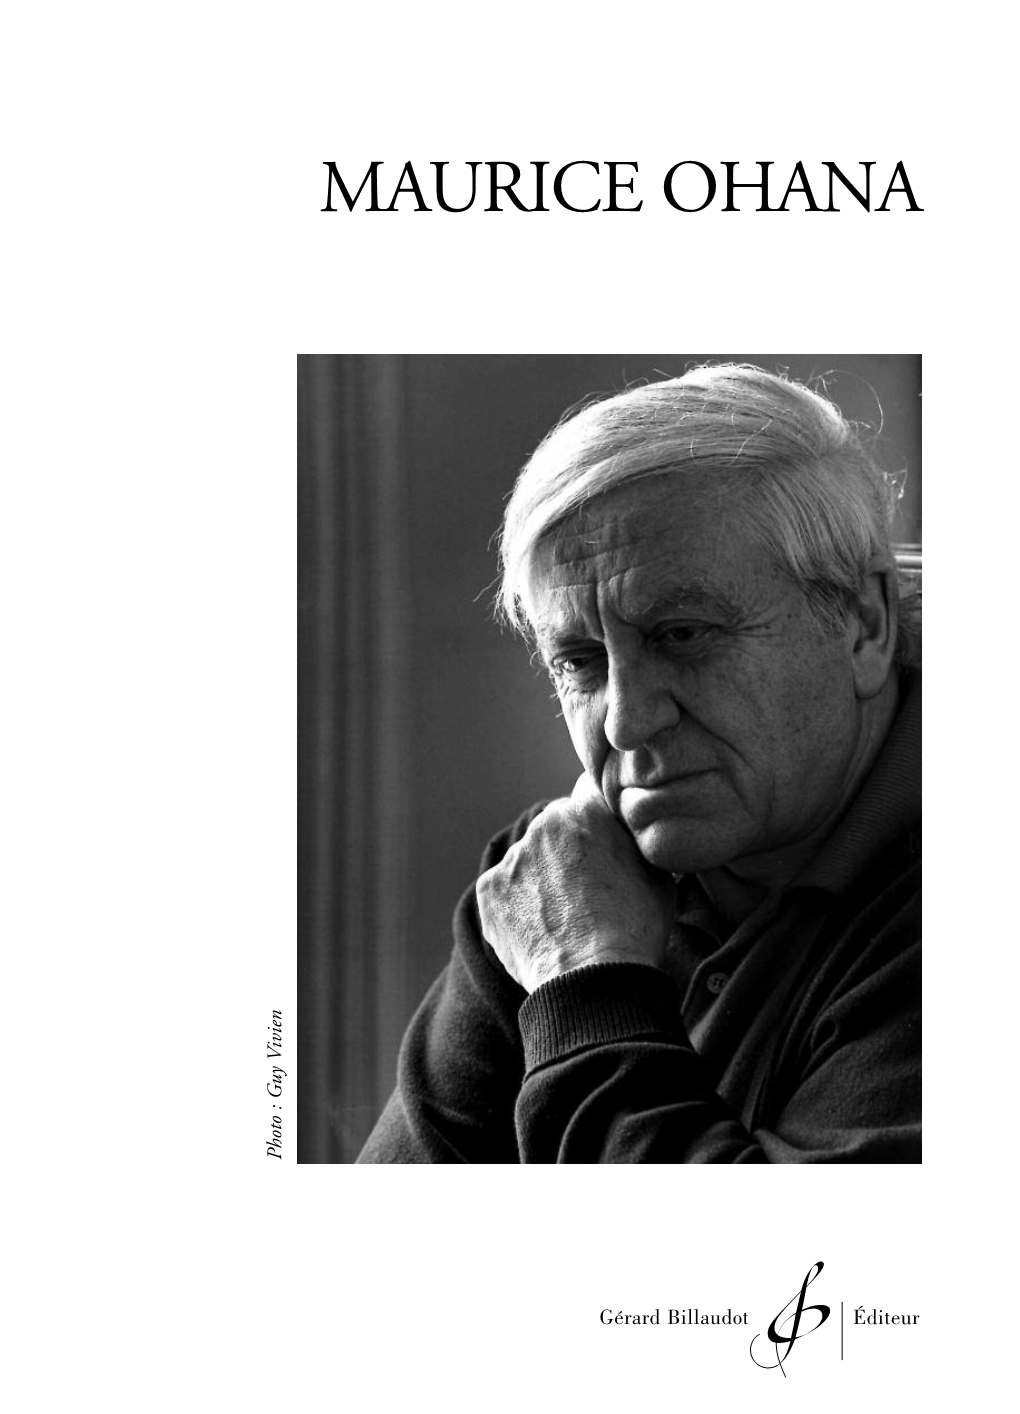 Catalogue Auteur De Maurice Ohana